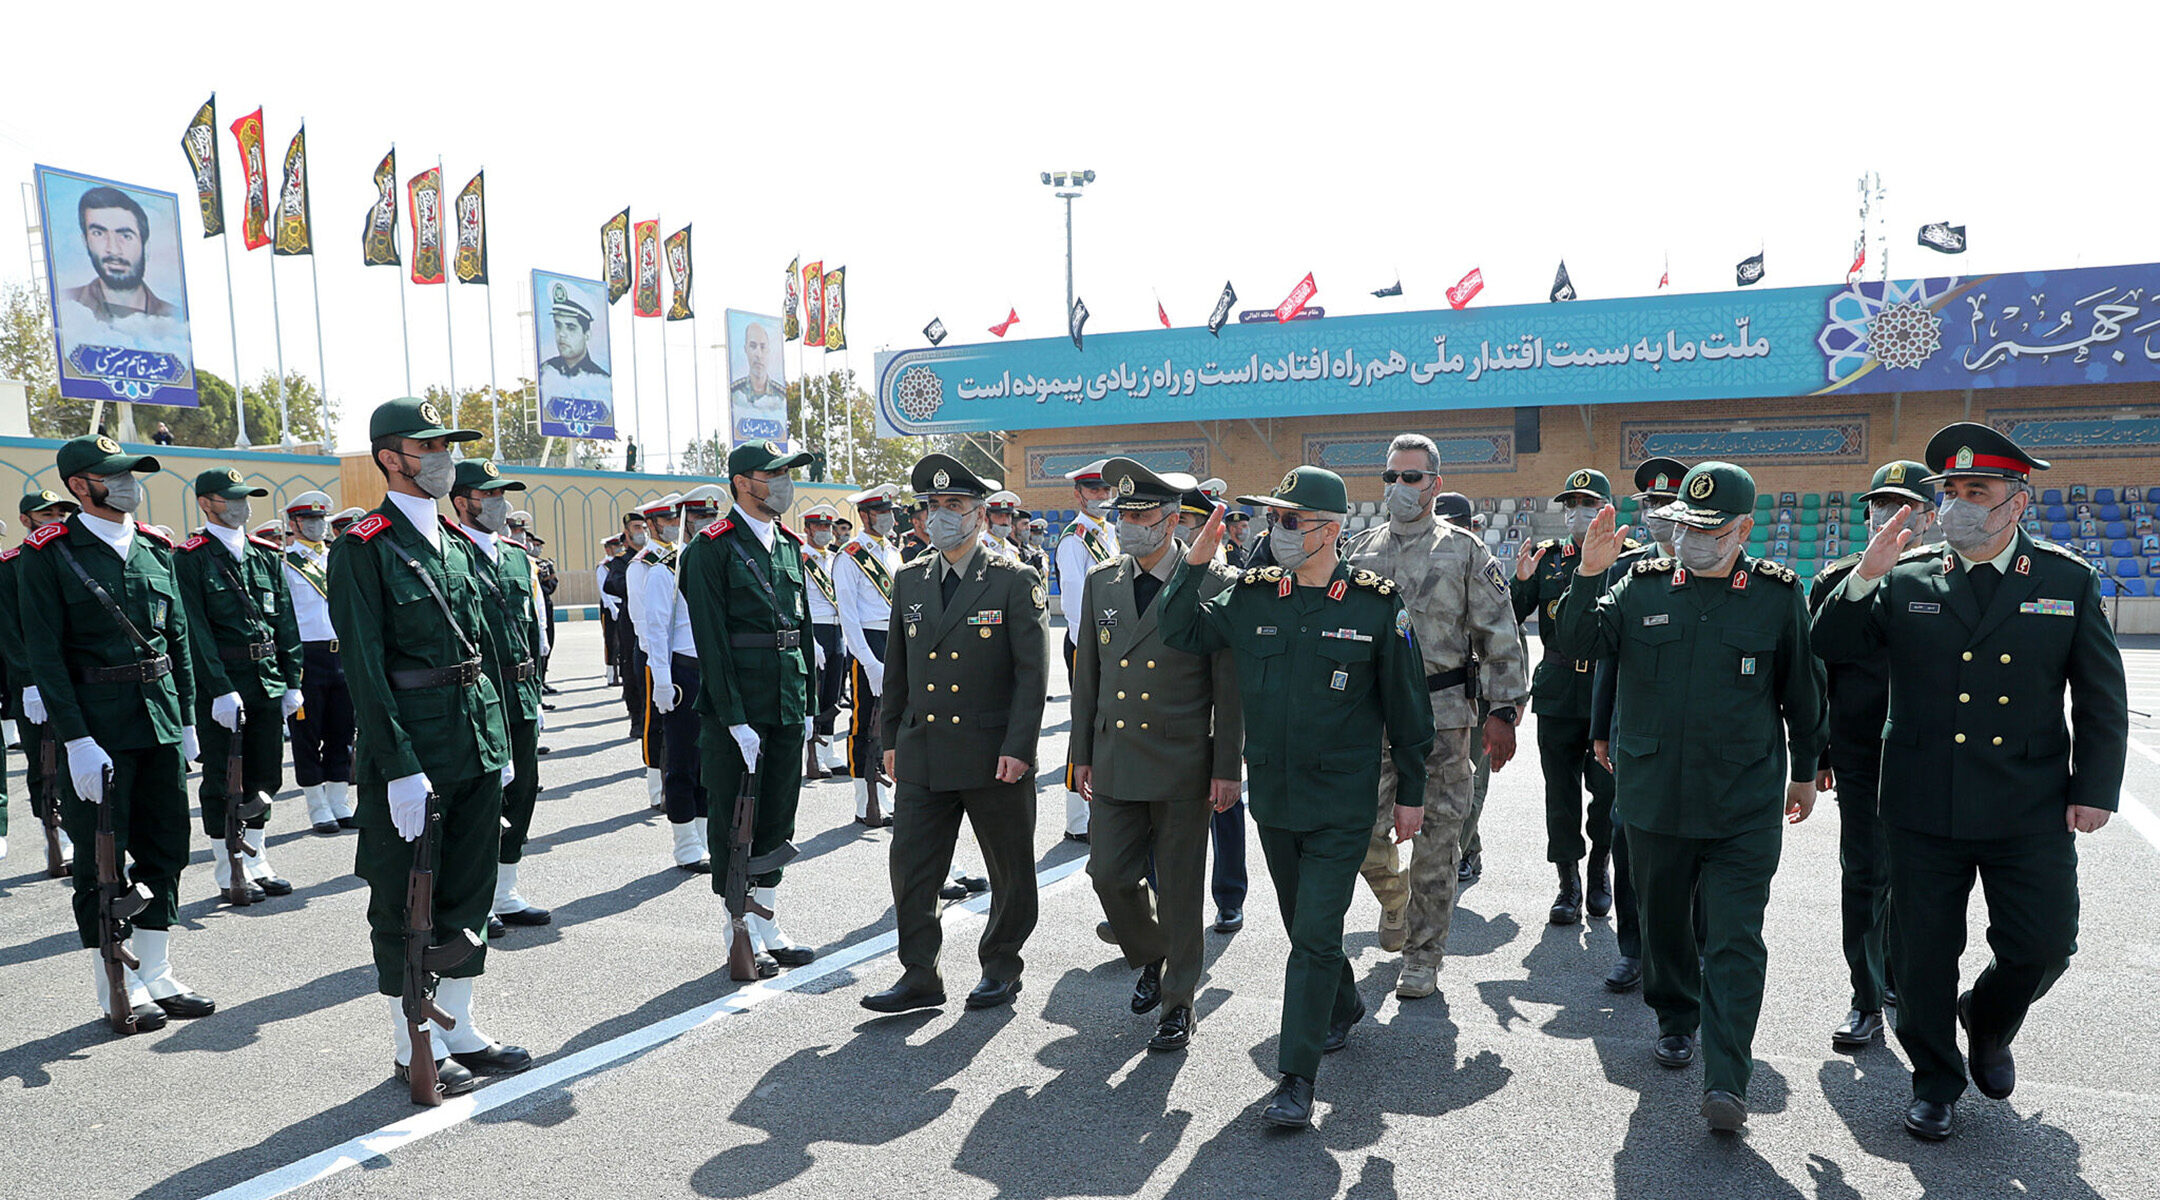 The Islamic Revolutionary Guard